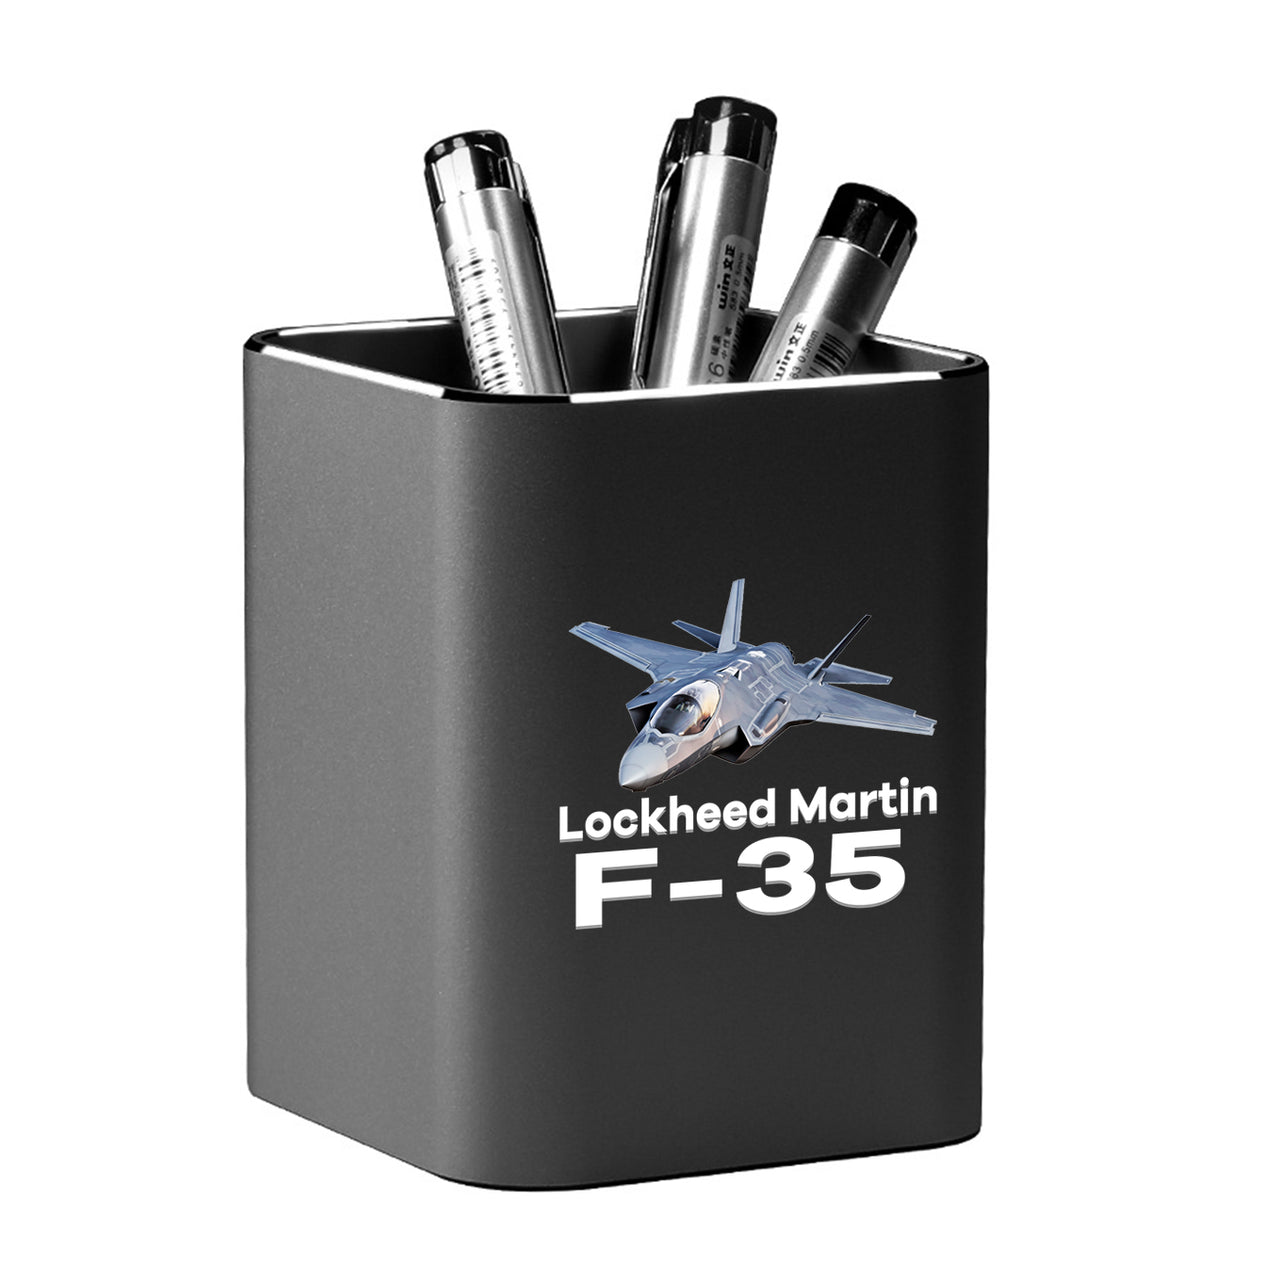 The Lockheed Martin F35 Designed Aluminium Alloy Pen Holders